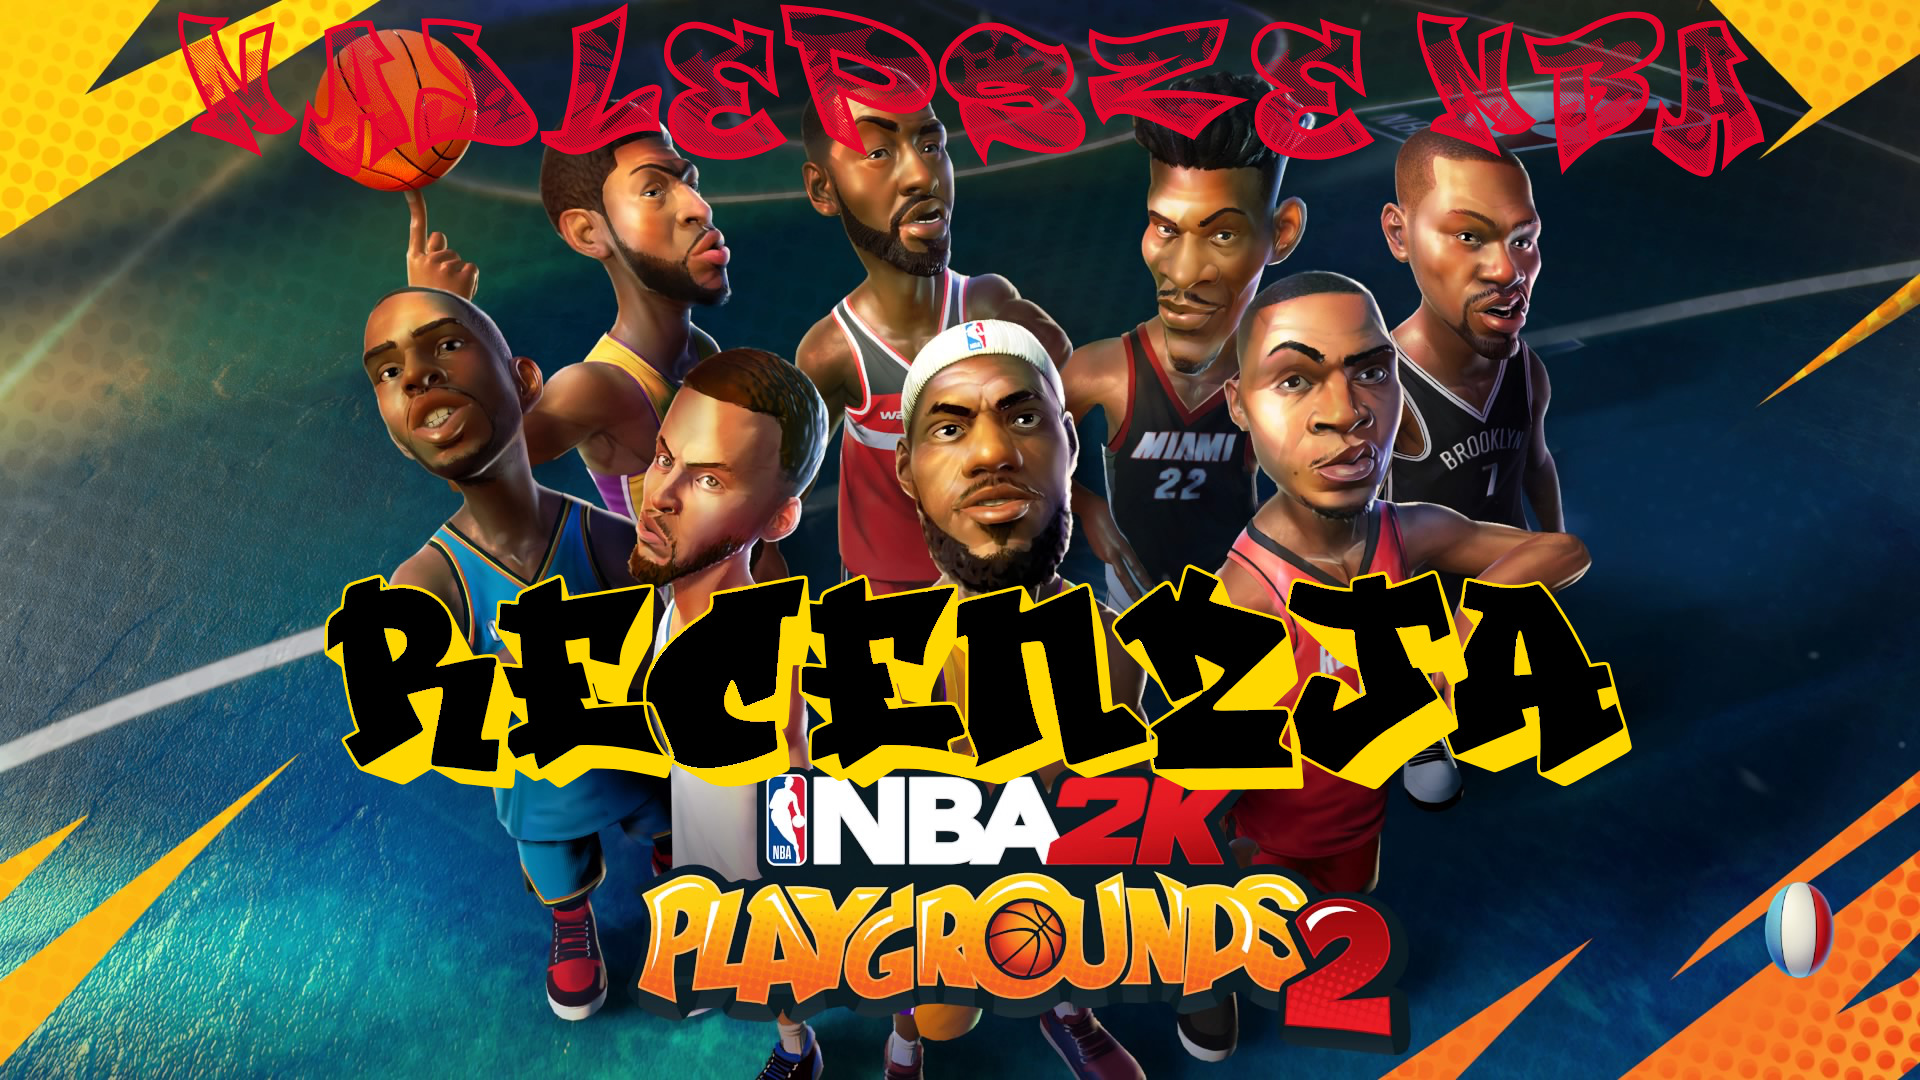 Recenzja NBA 2K Playgrounds 2